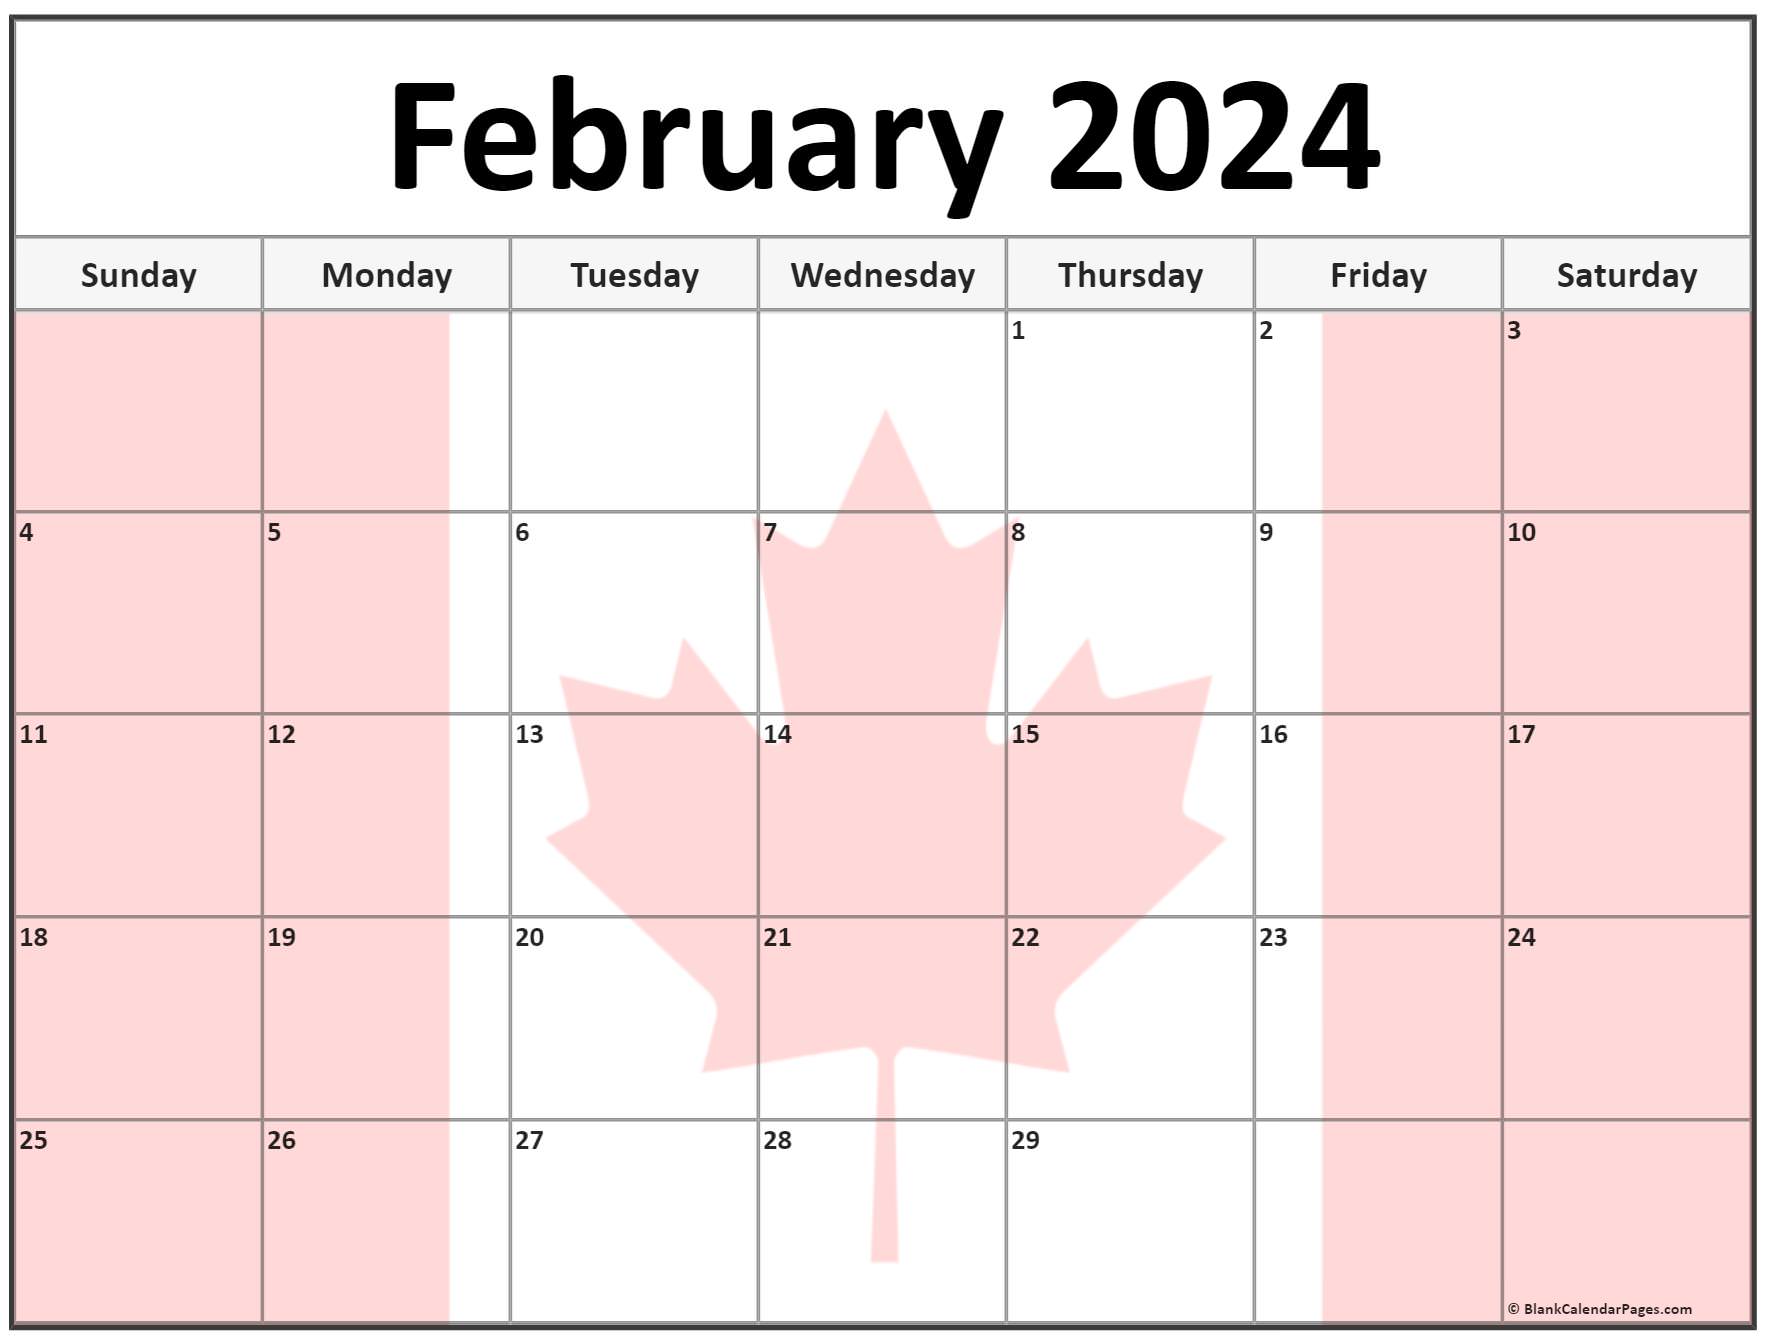 February Holidays 2024 Canada Frank Jillene